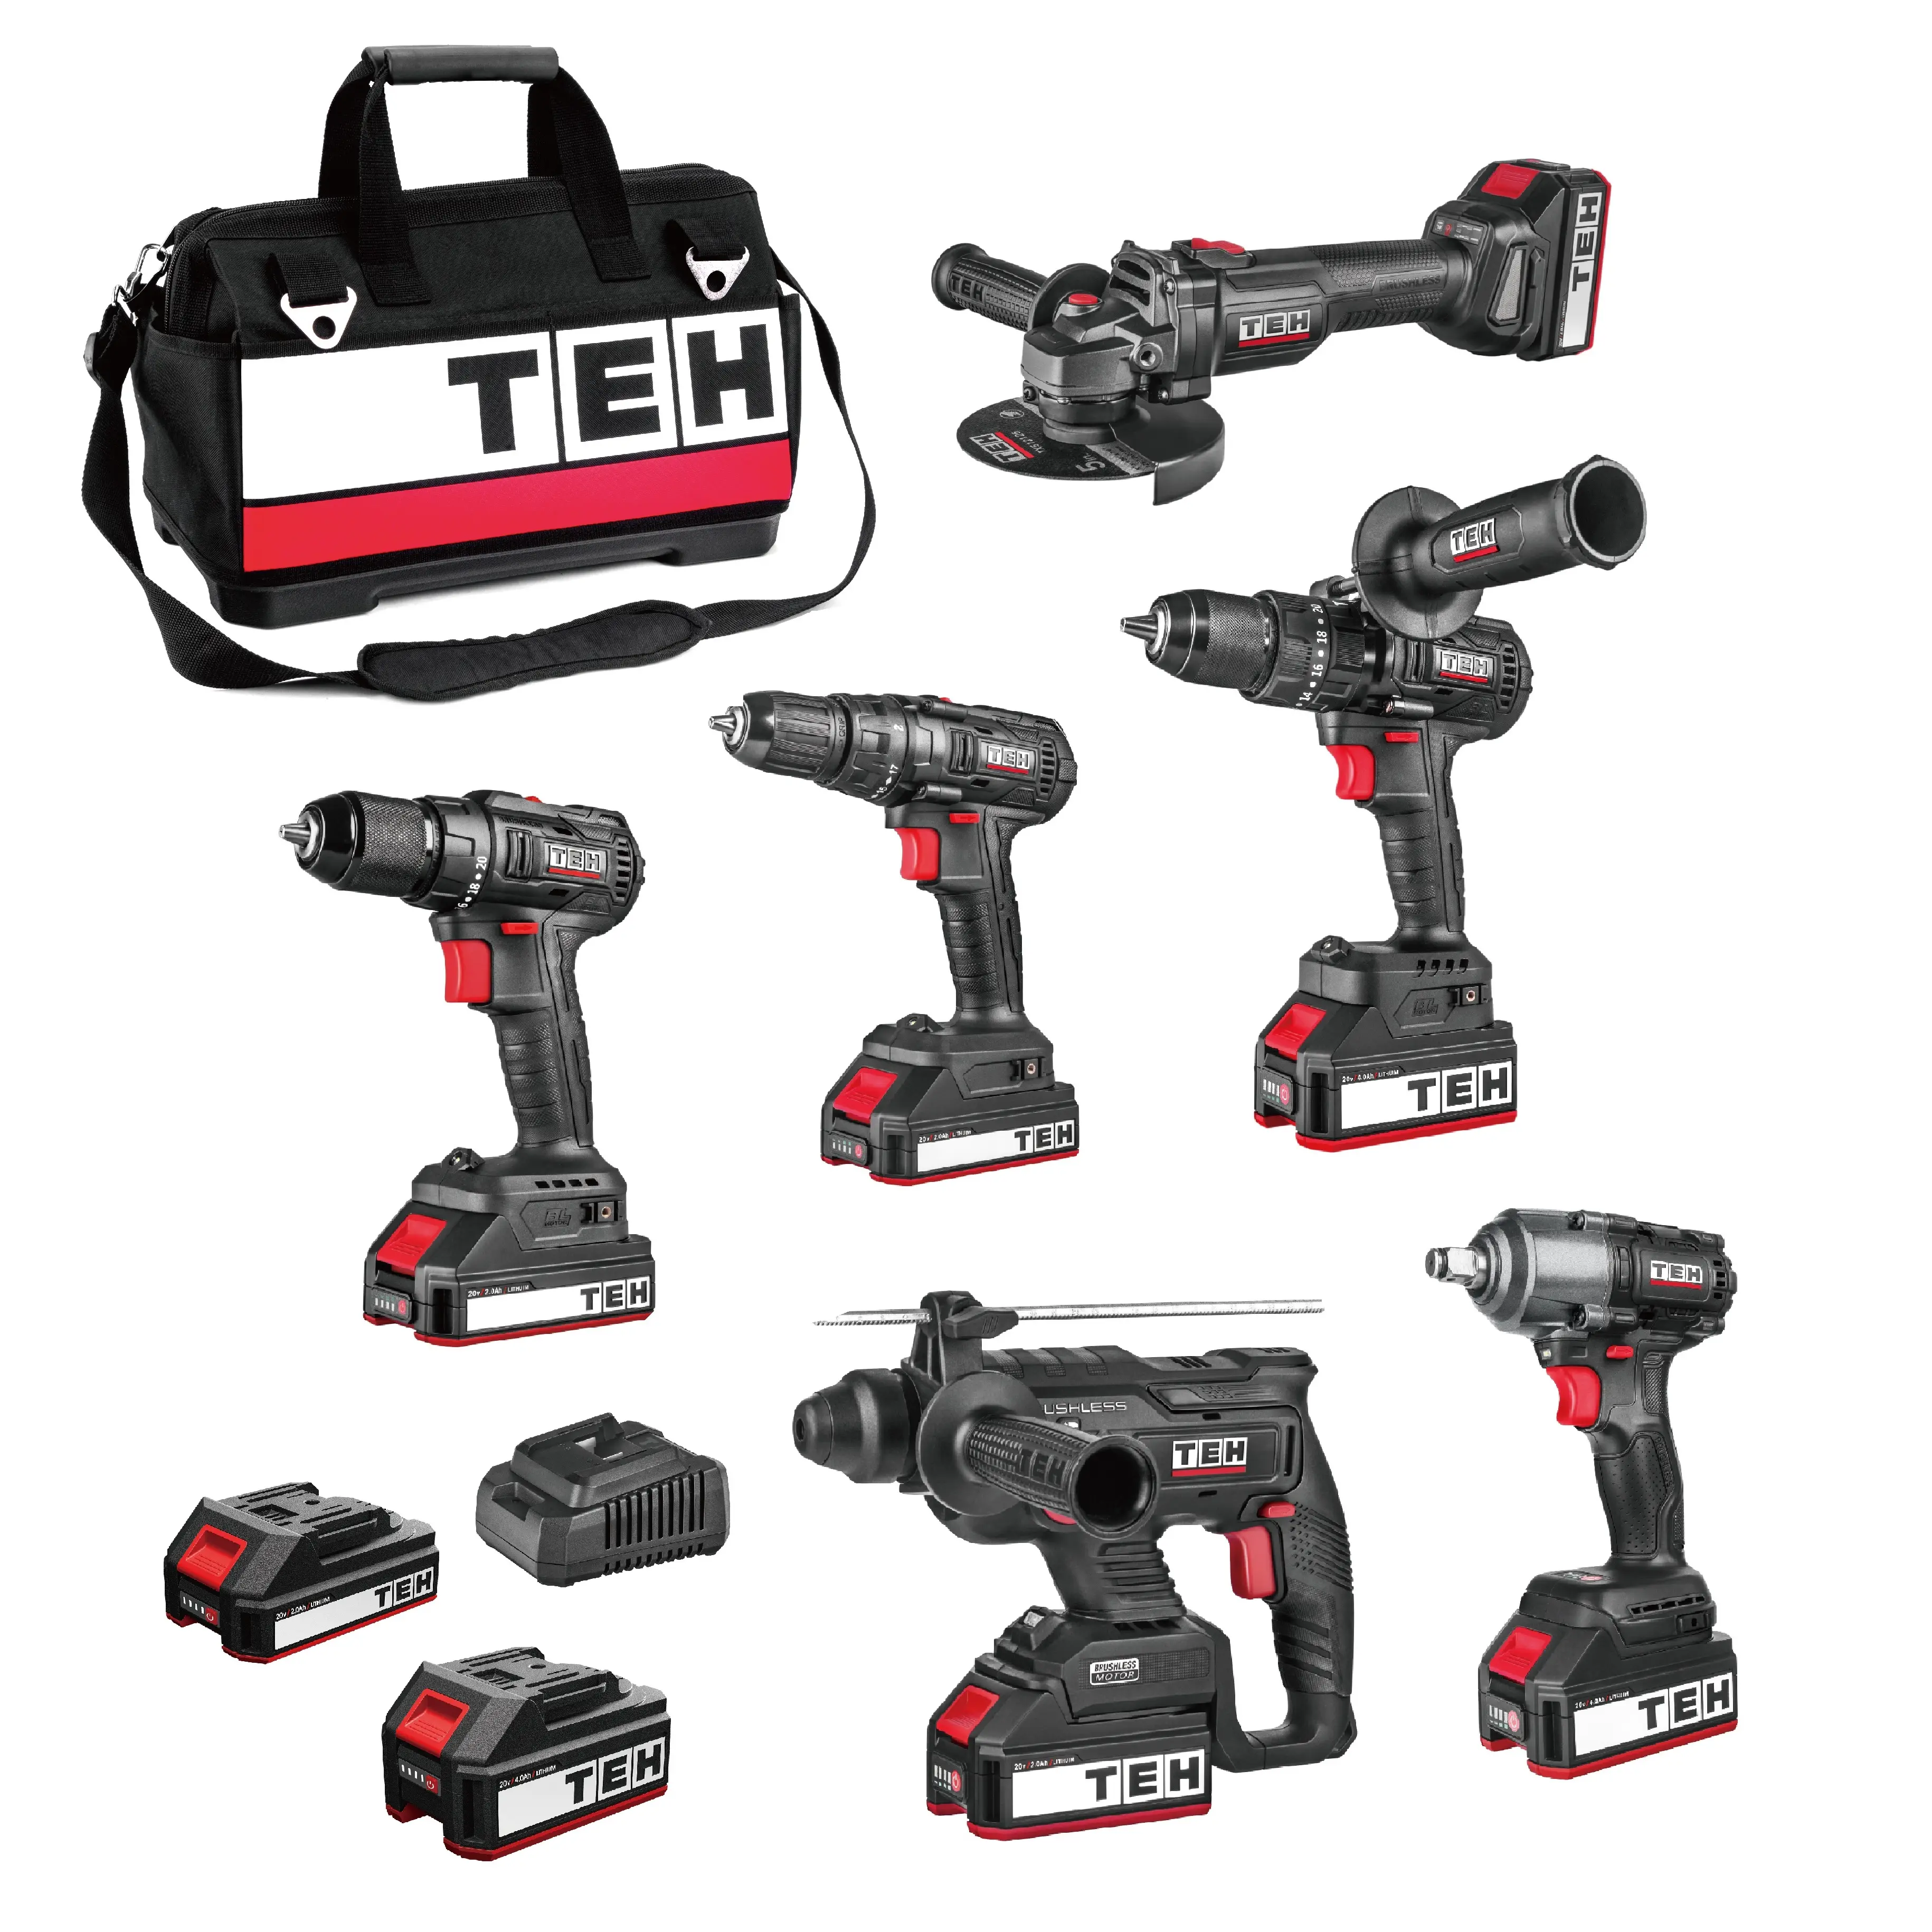 TEH 20V MAX Cordless Drill Kits Power Tools Combo Kits Machine Battery Charger Set